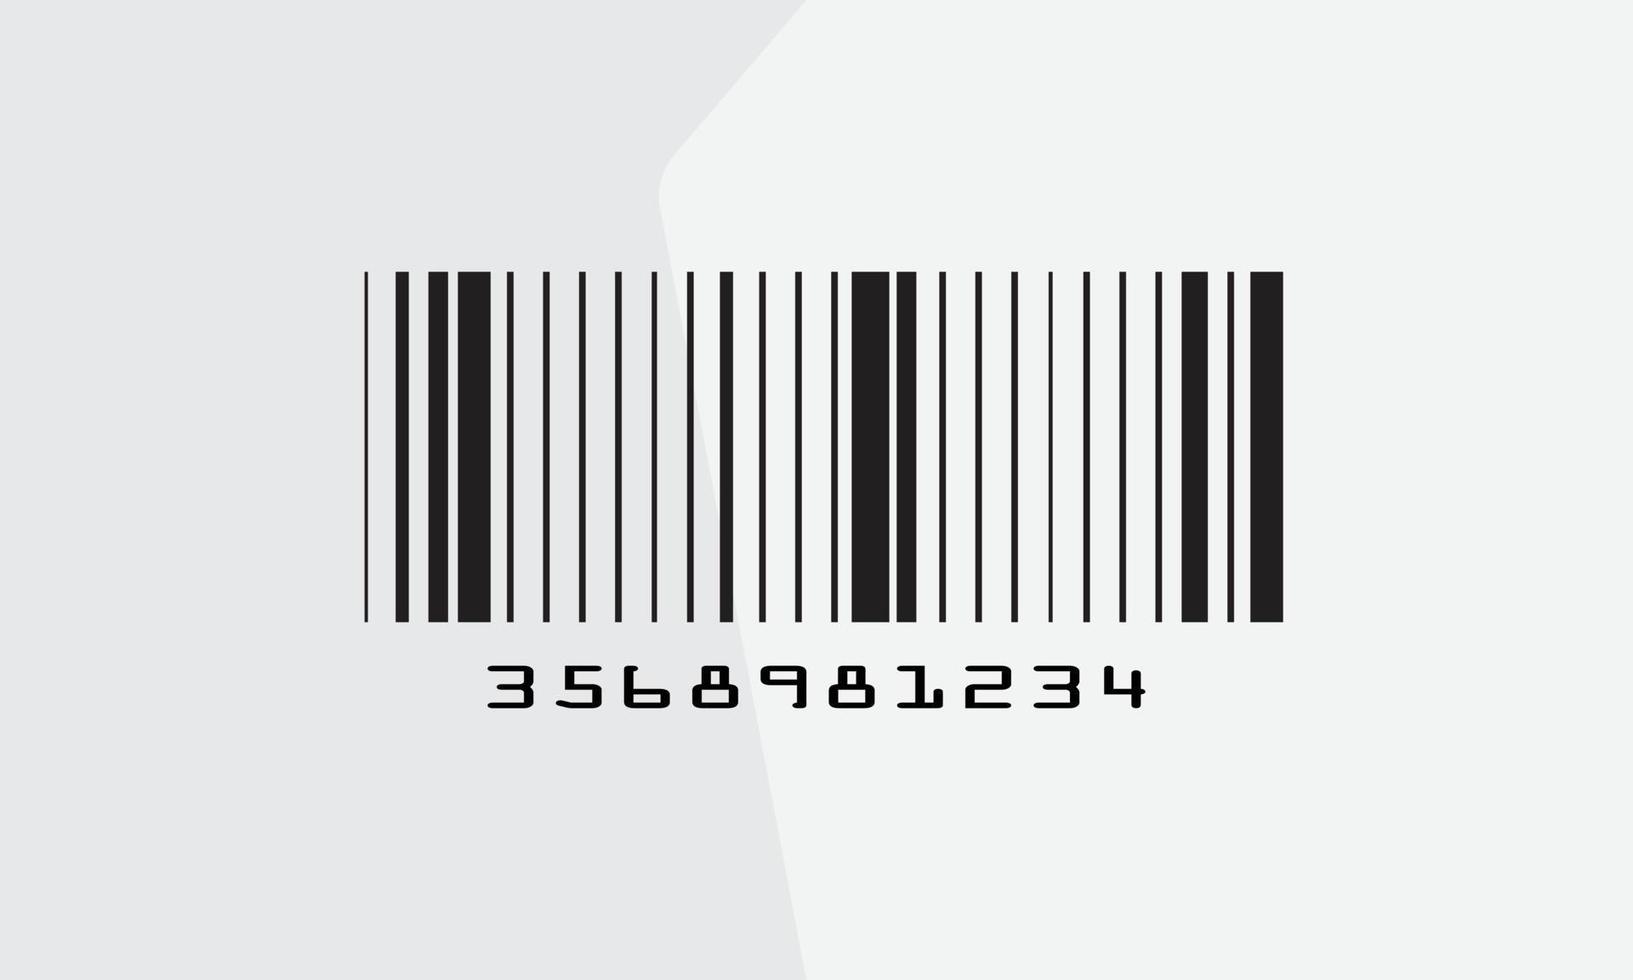 Barcode-Vektorsymbol für Produktidentifikationsnummer oder Verpackungsmarke vektor